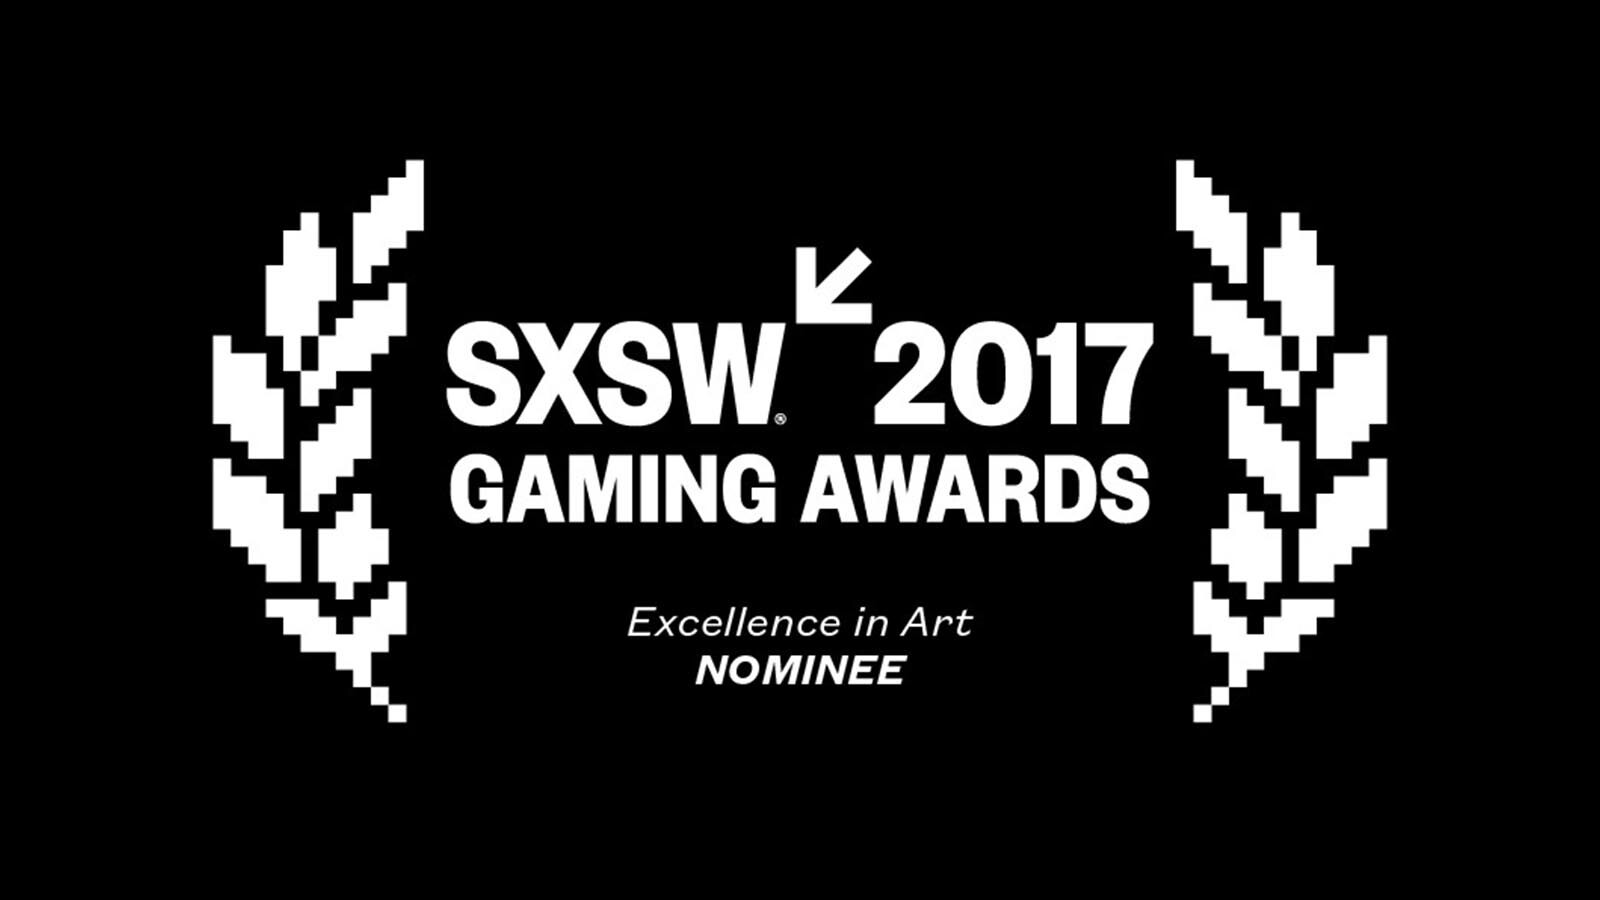 Enter the 2017 SXSW Gaming Awards